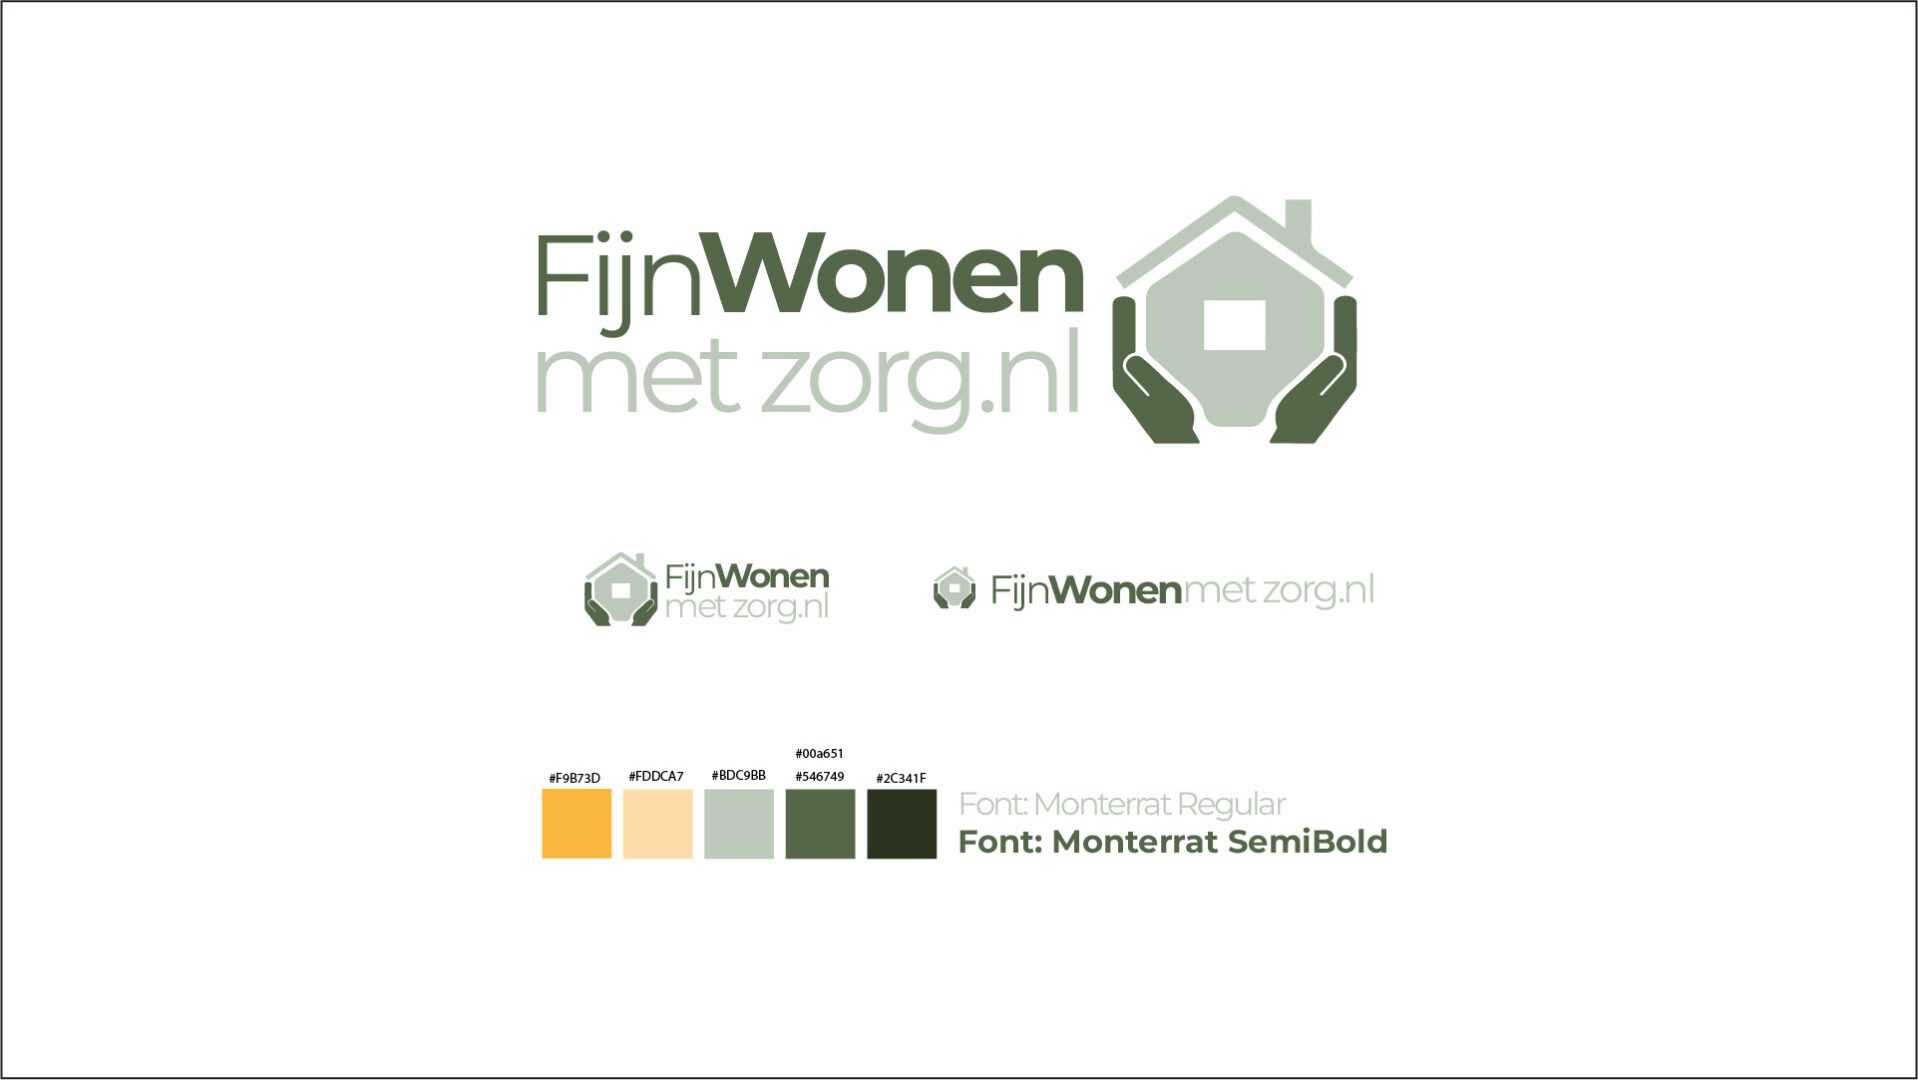 Fijnwonenmetzorg.nl logo